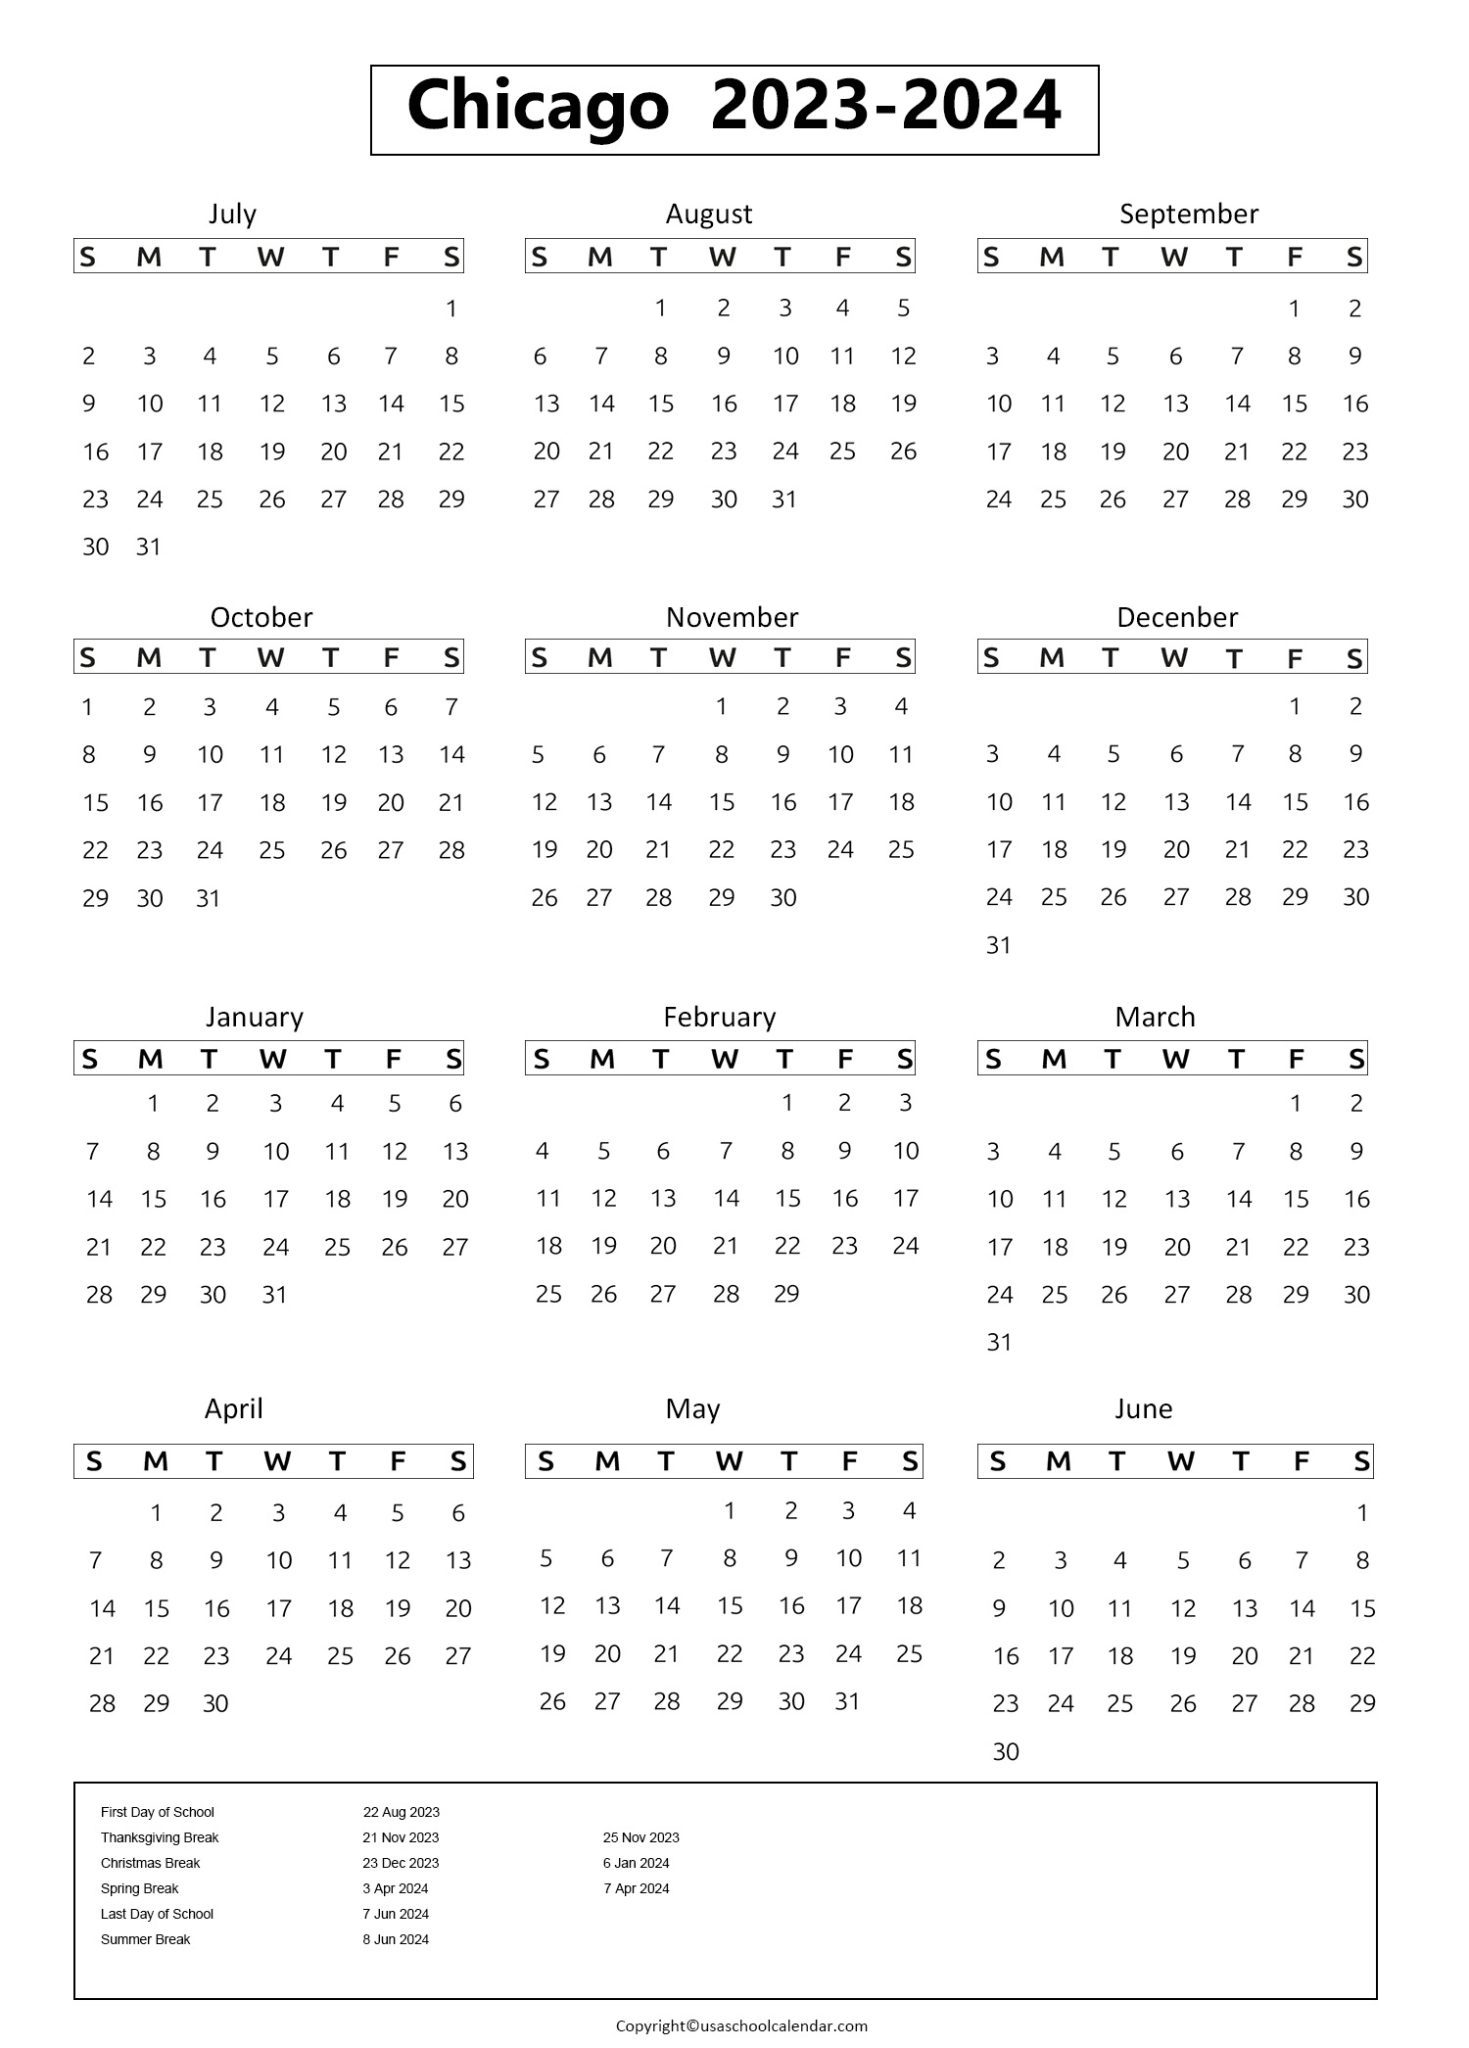 chicago-public-schools-calendar-holidays-2023-2024-cps